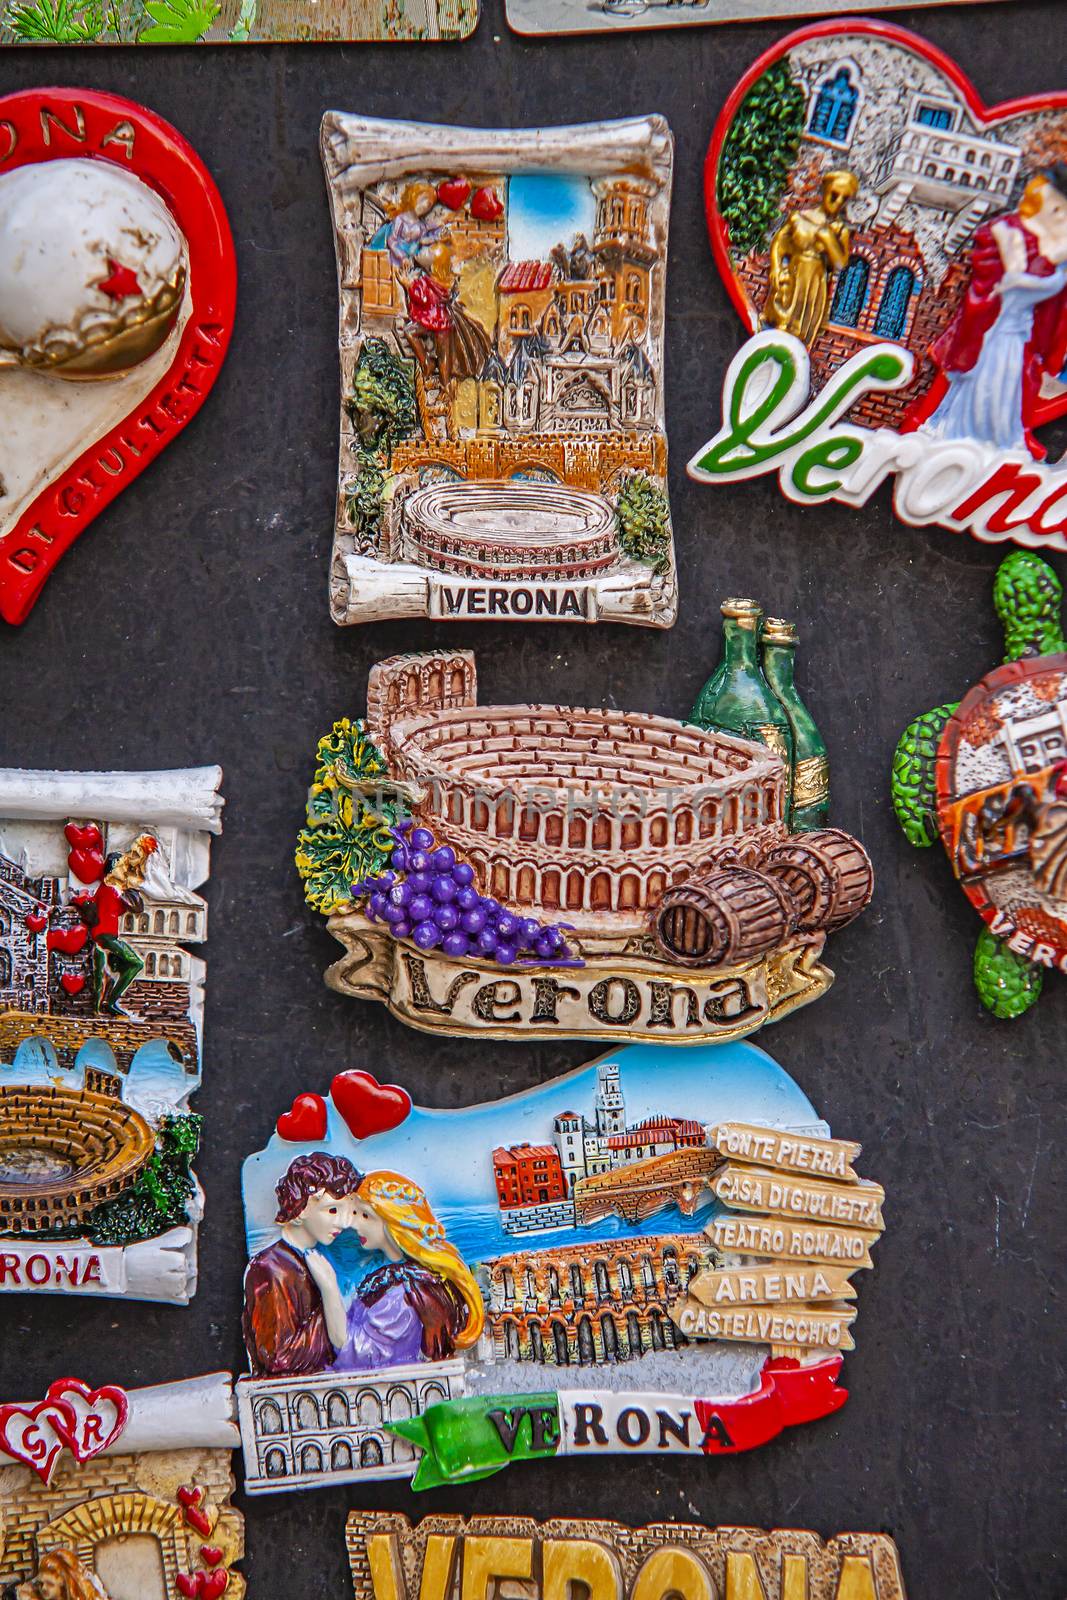 Verona souvenirs detail 2 by pippocarlot